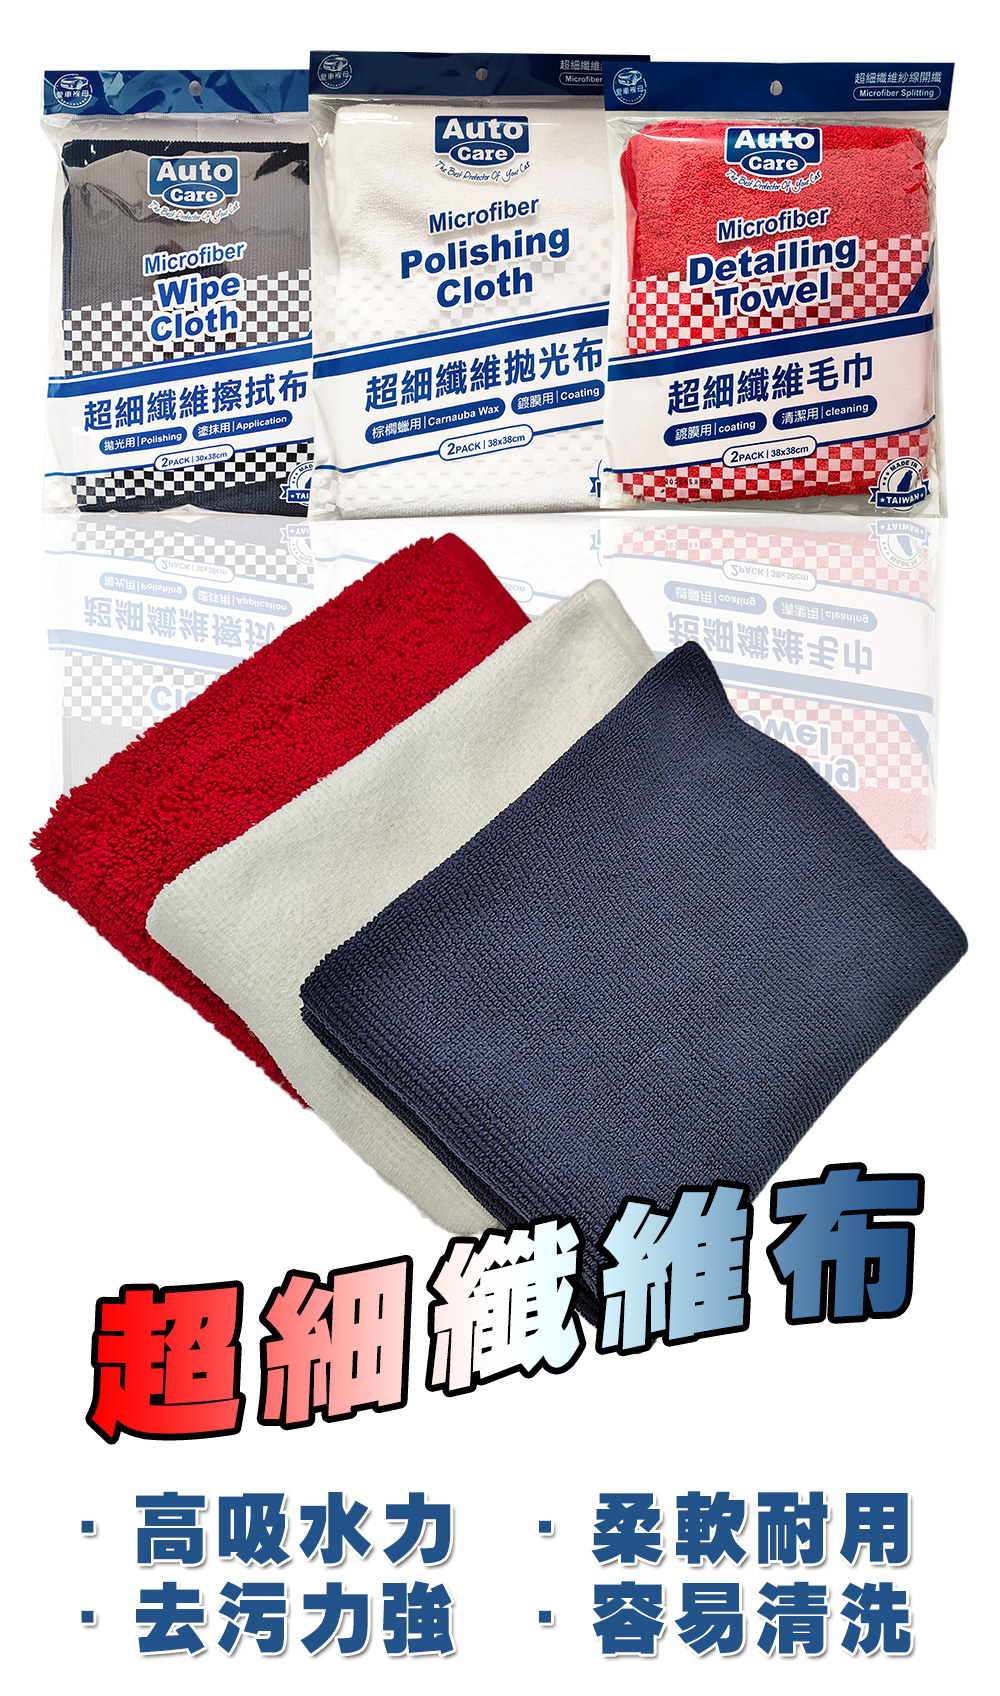 Microfiber Towel 超細纖維布